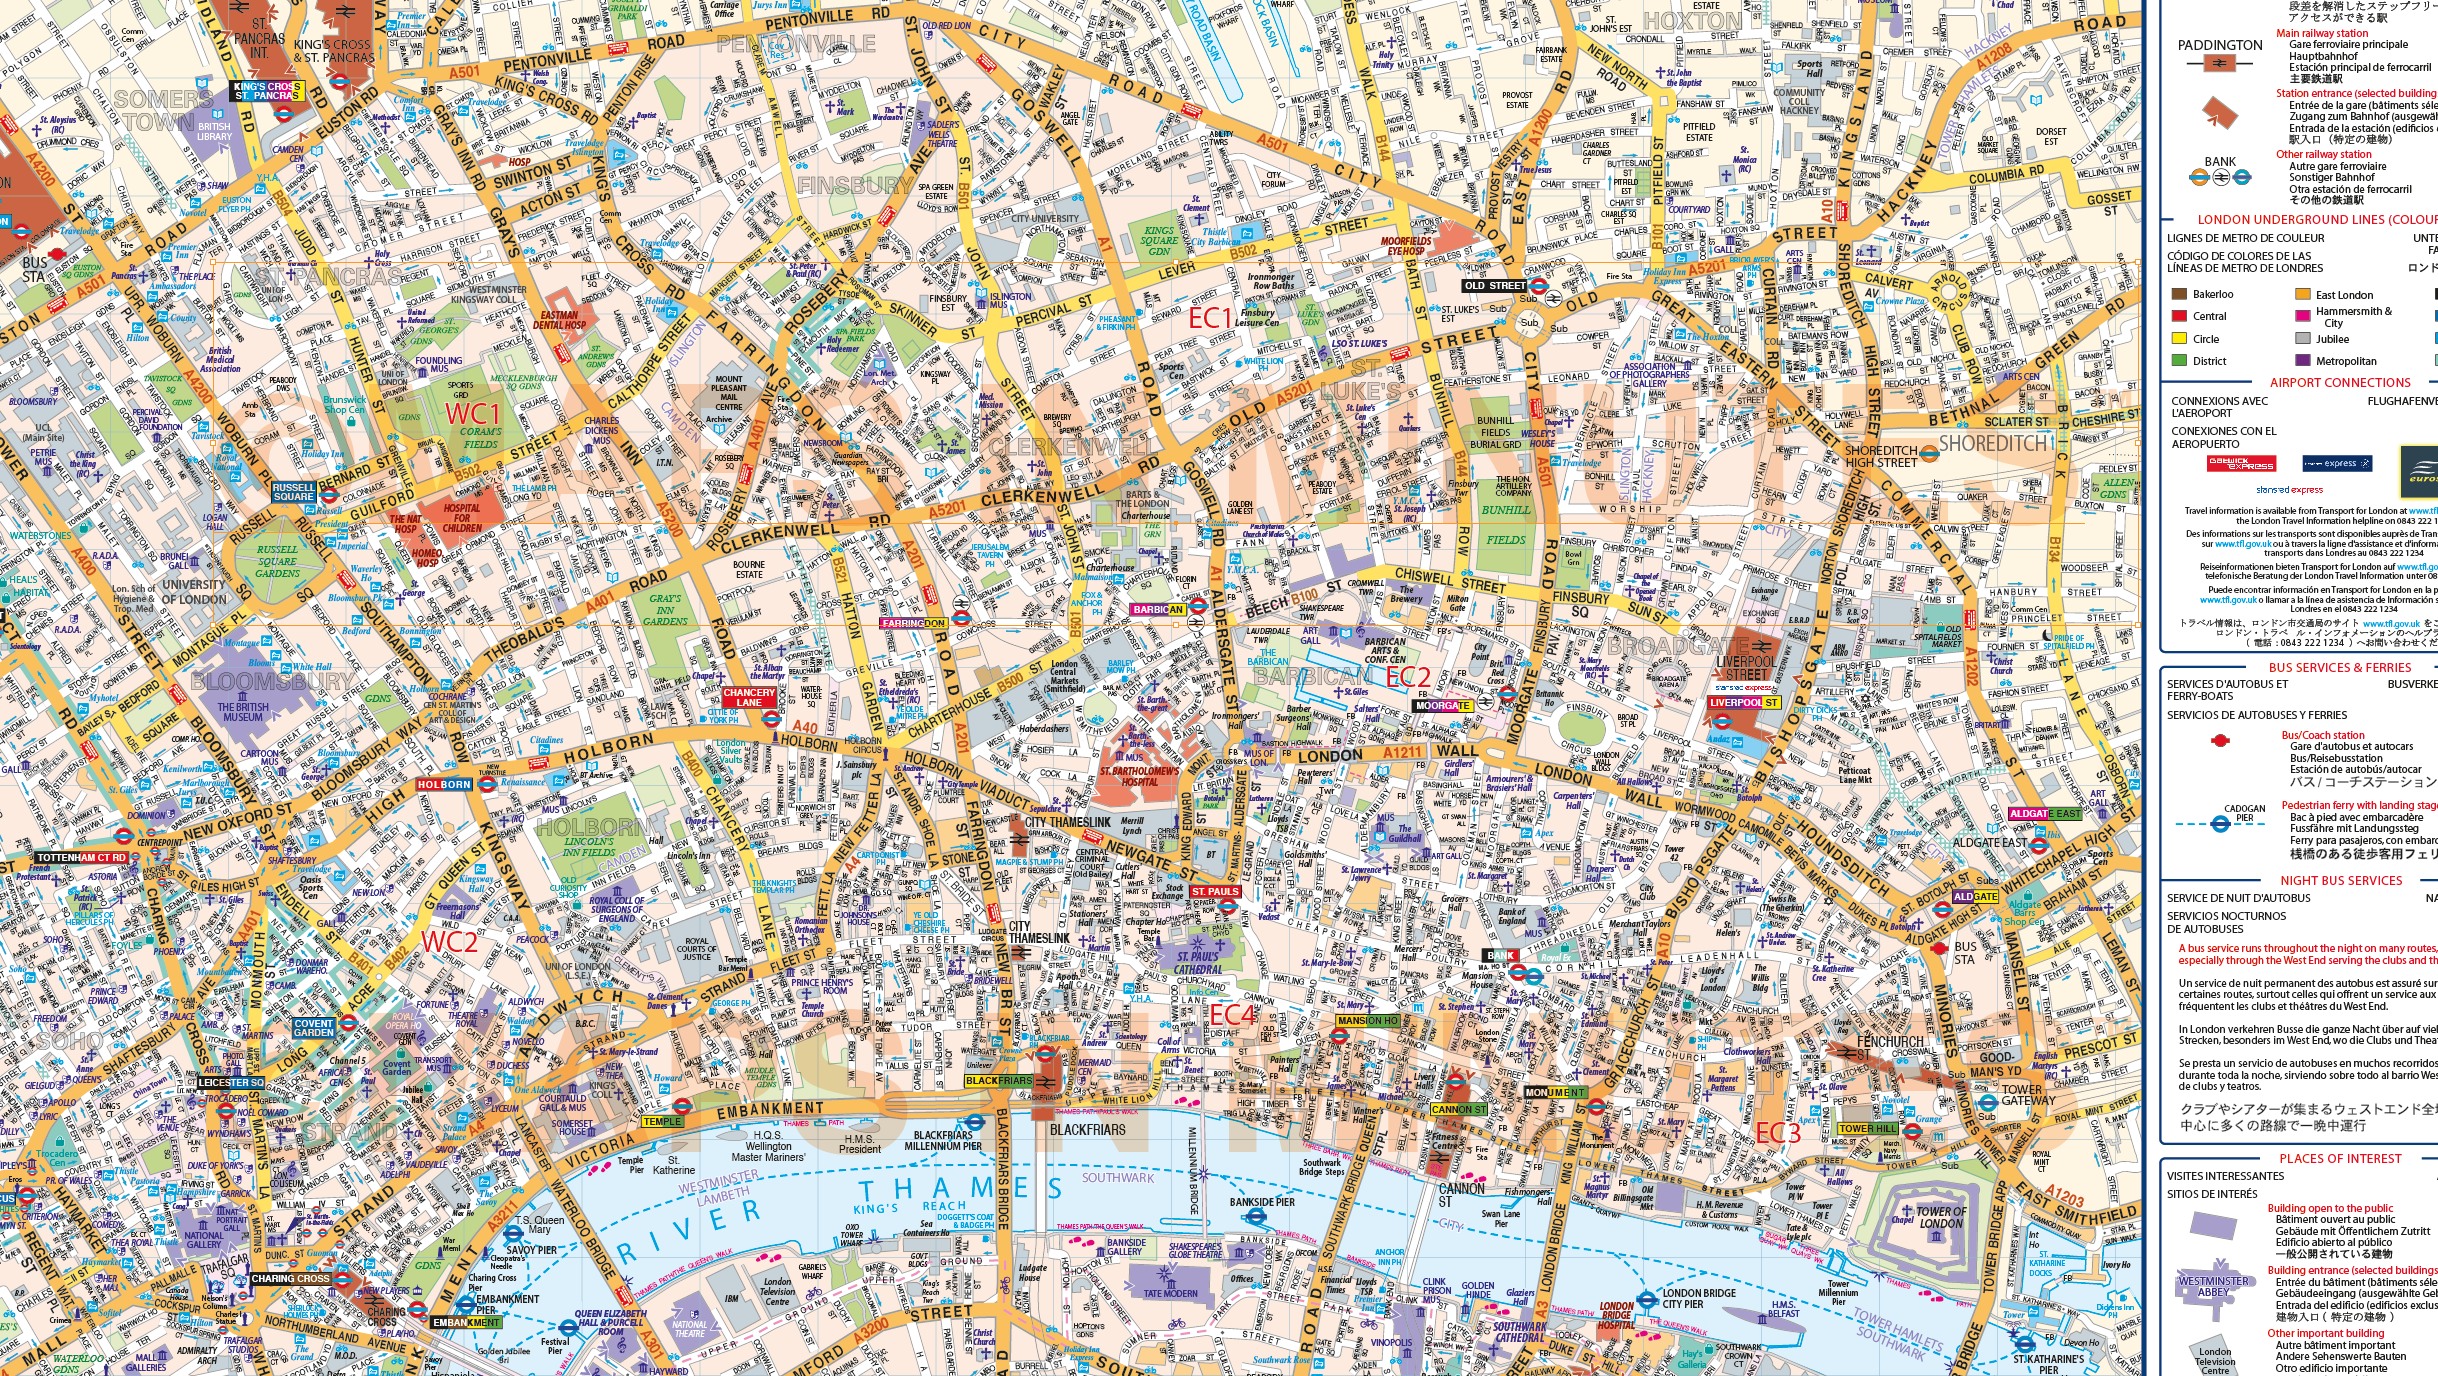 London Street Map Street Map Of London England Vrogue Co